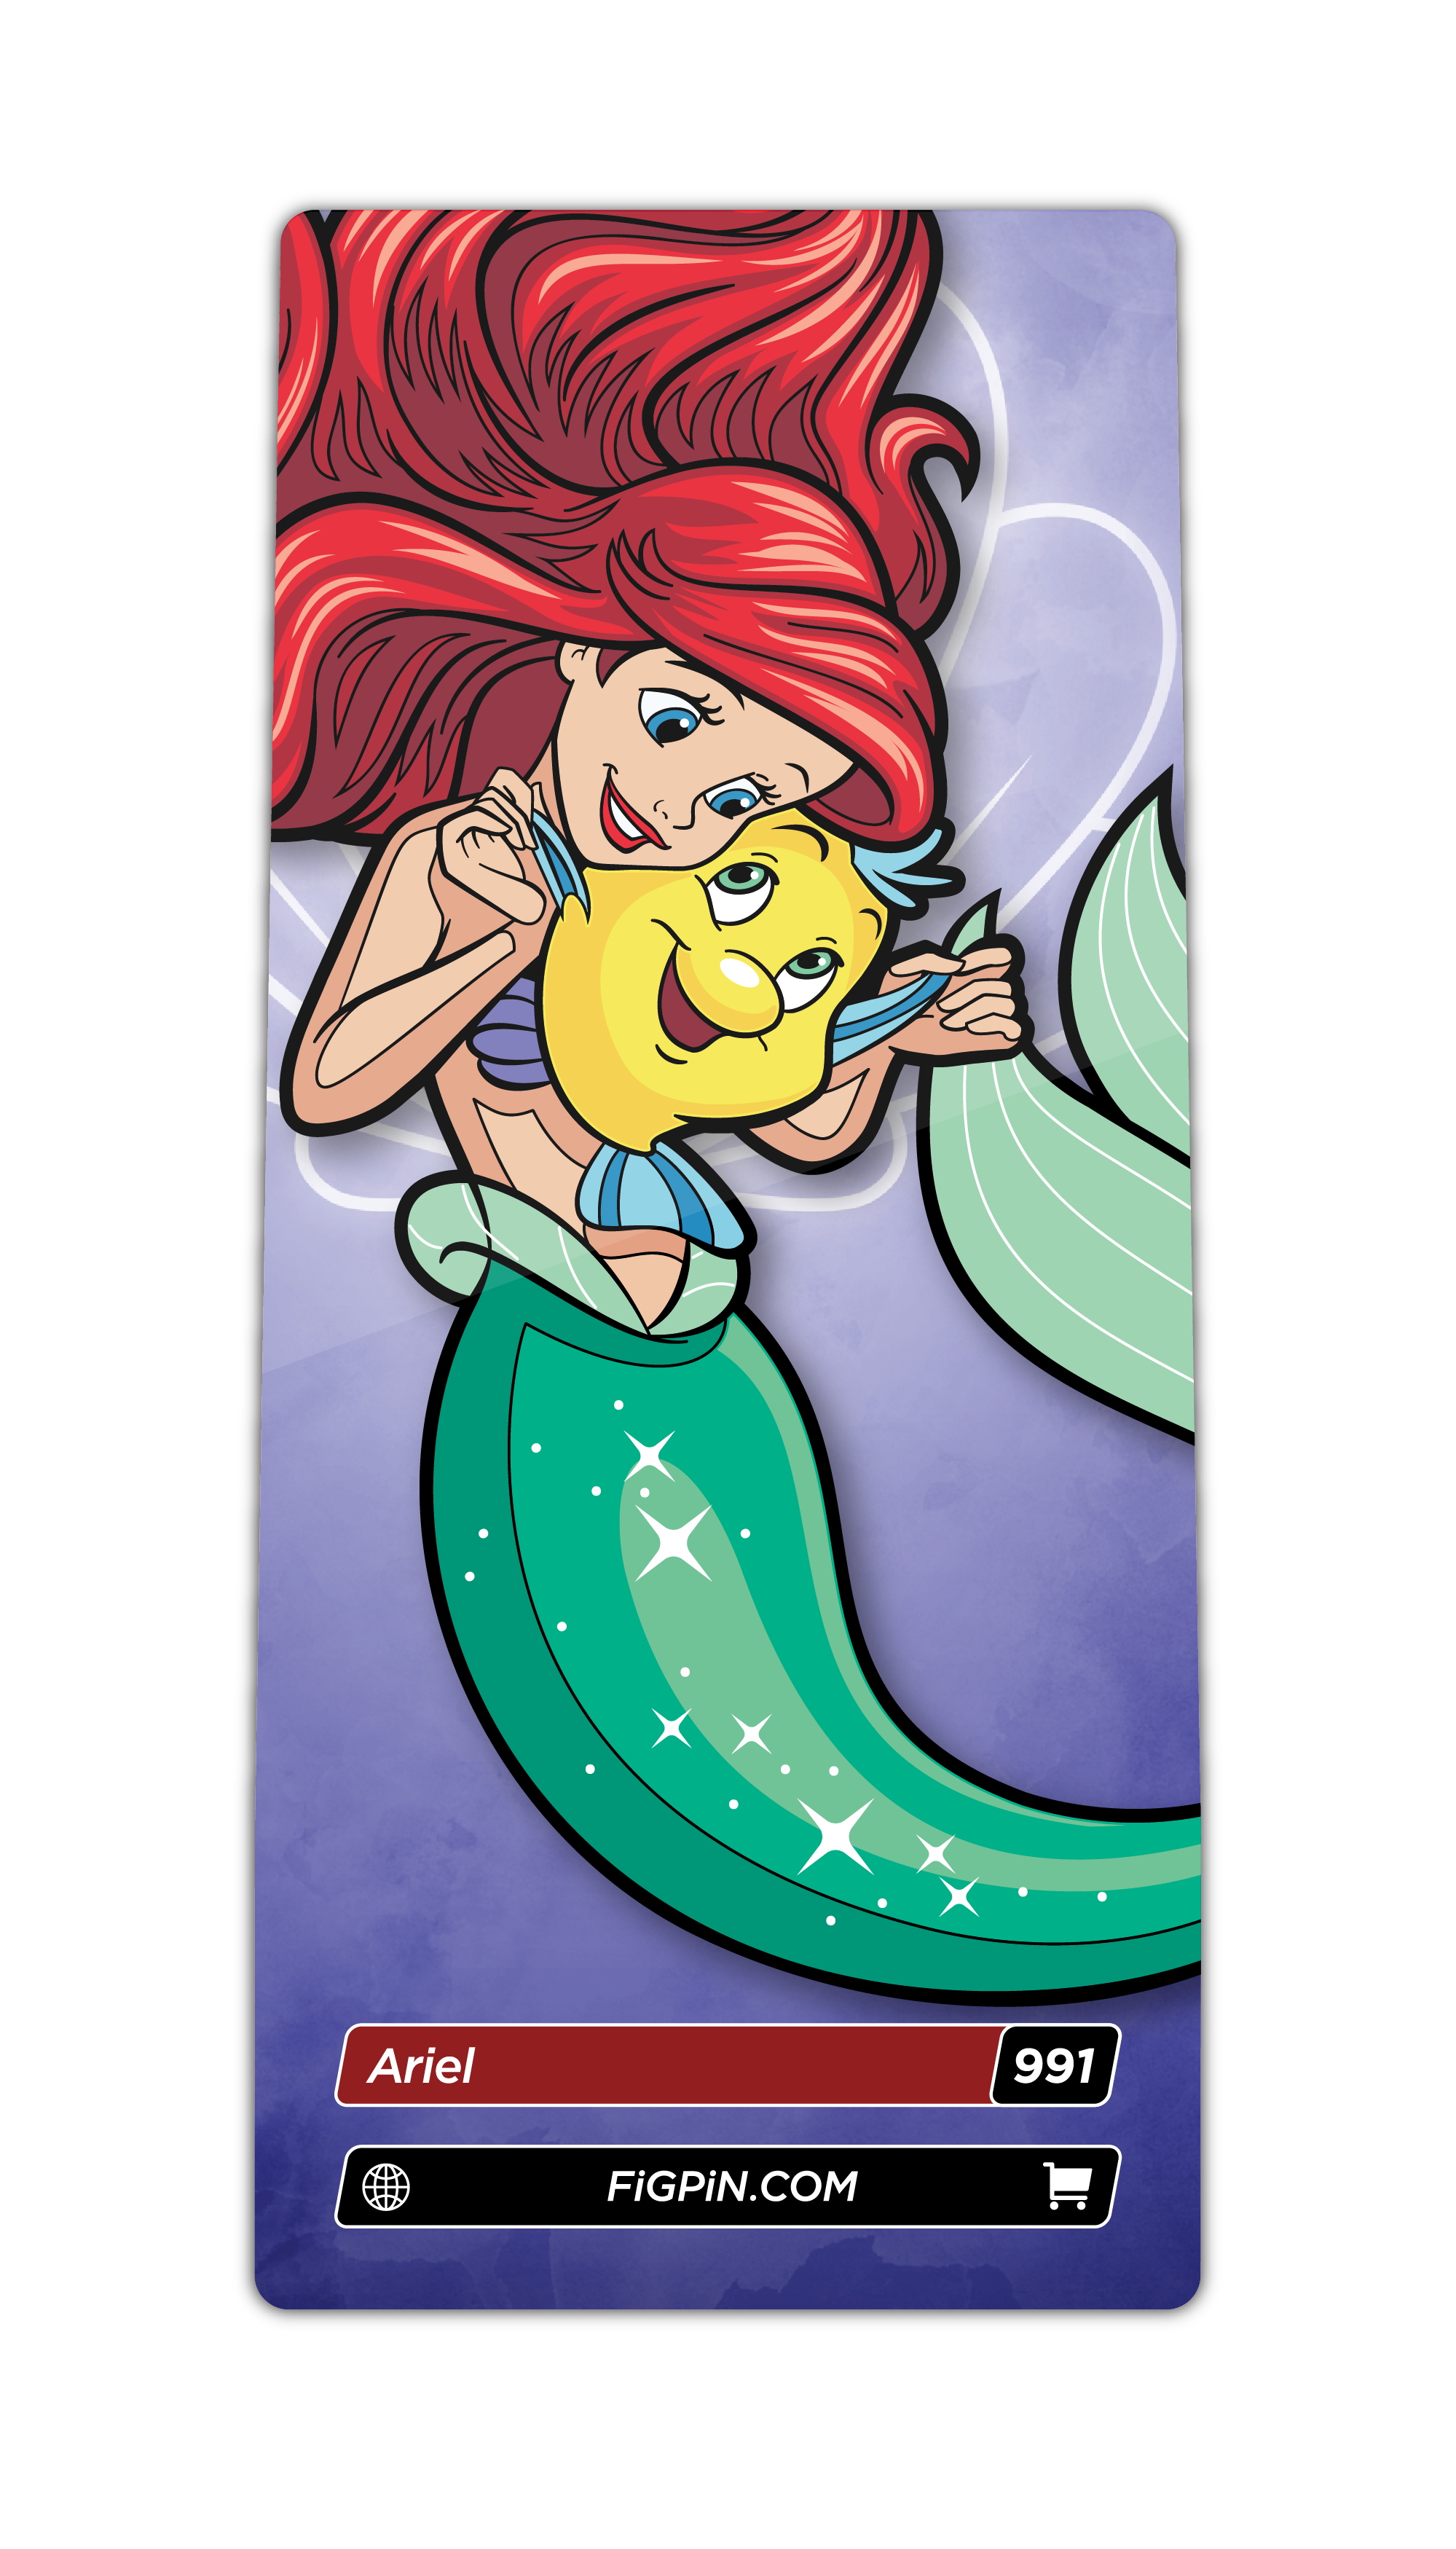 Ariel (991)